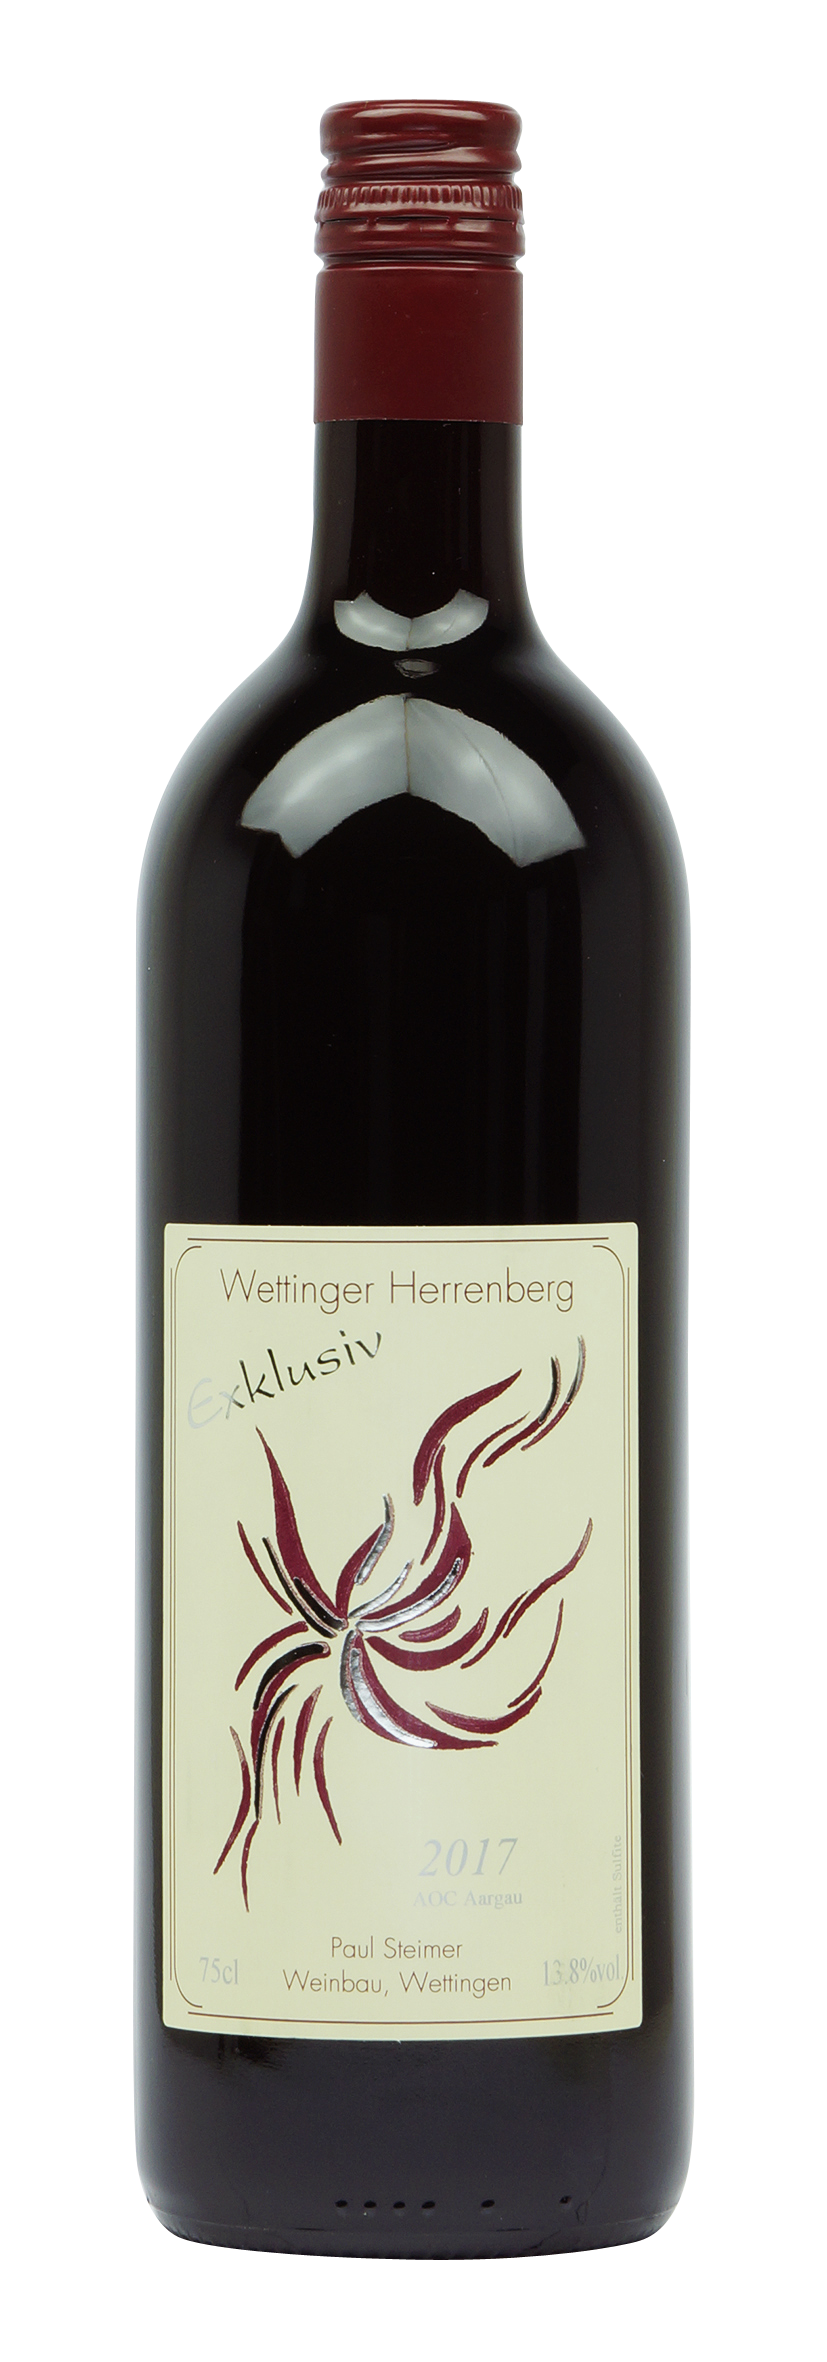 Aargau AOC Wettinger Herrenberg Pinot Noir Exklusiv 2017